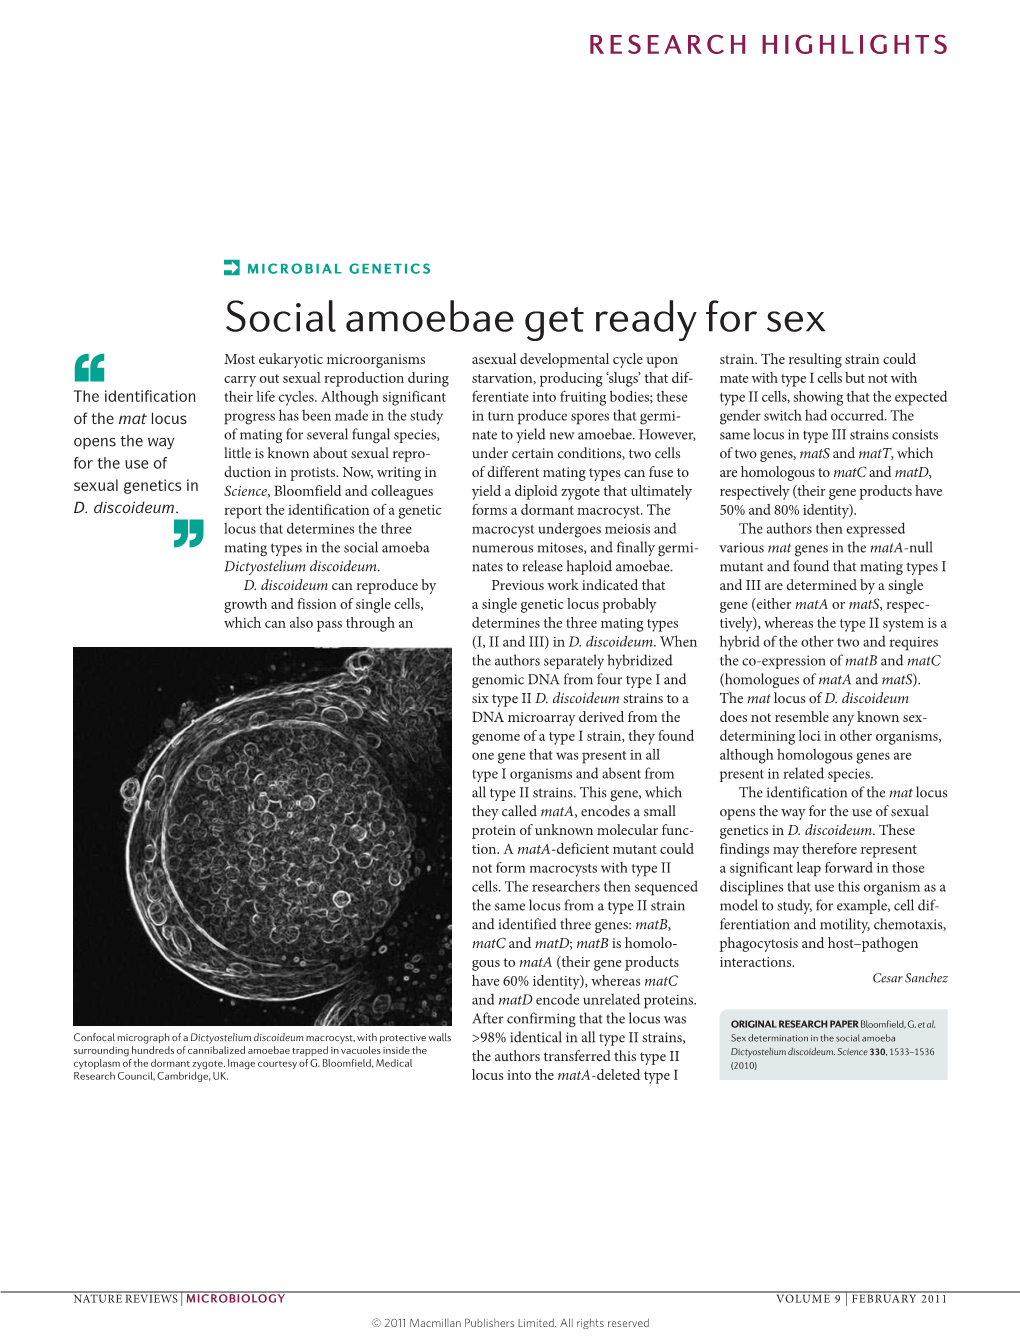 Microbial Genetics: Social Amoebae Get Ready For